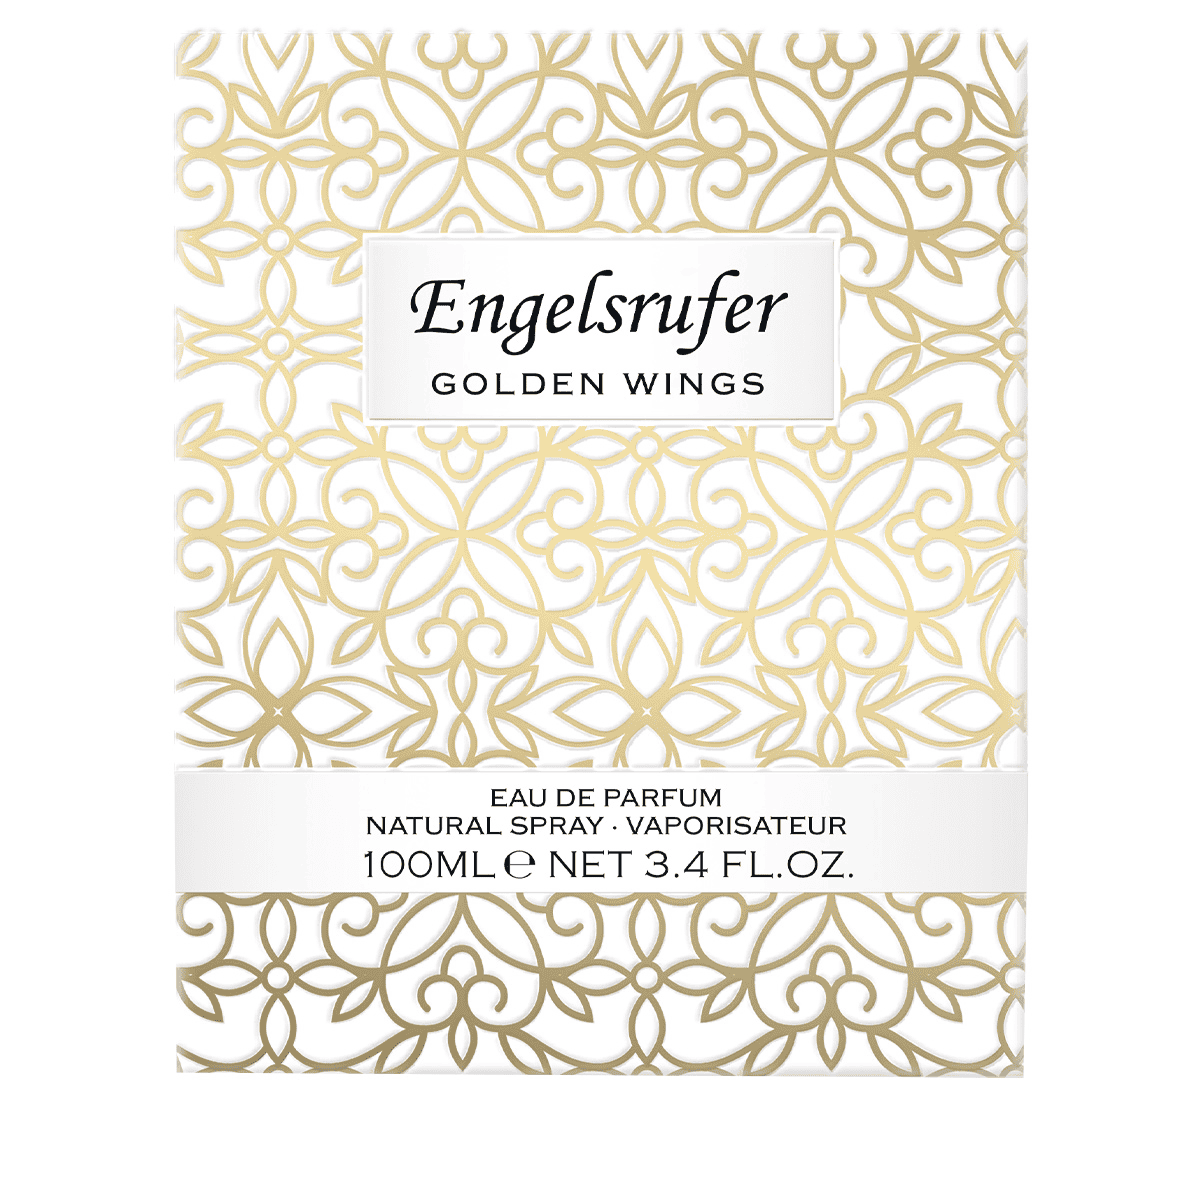 Engelsrufer - Golden Wings Eau de Parfum Natural Spray •